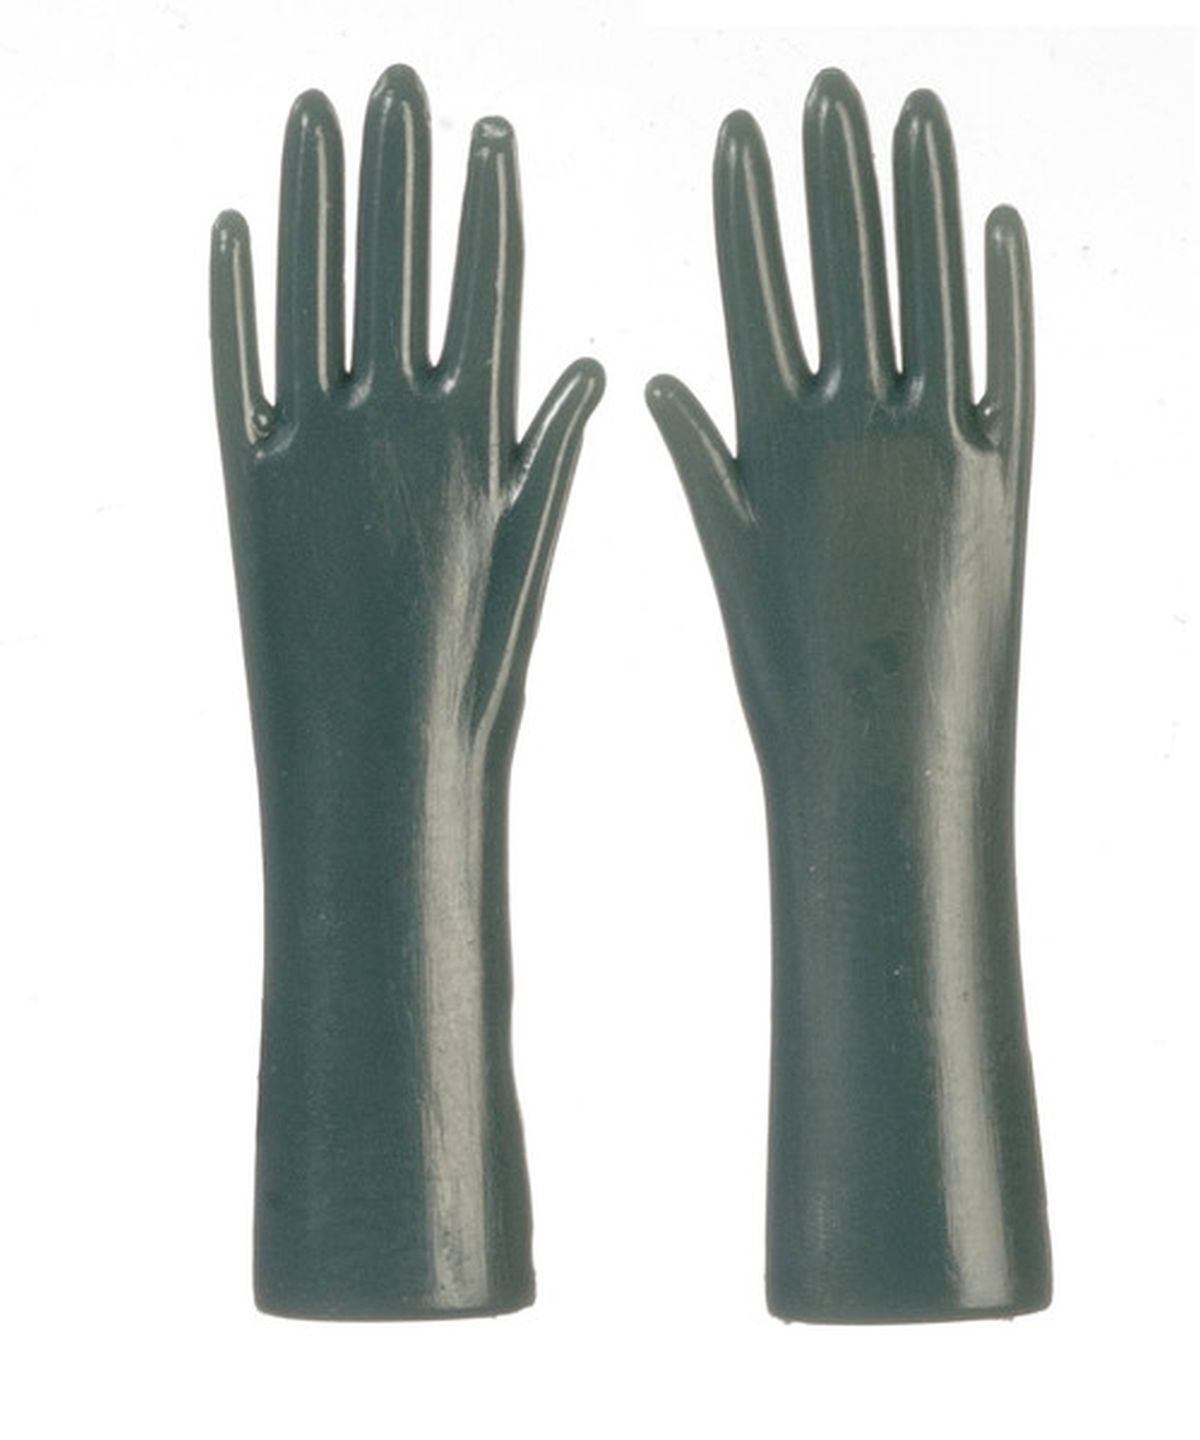 Green Rubber Gloves by International Miniatures